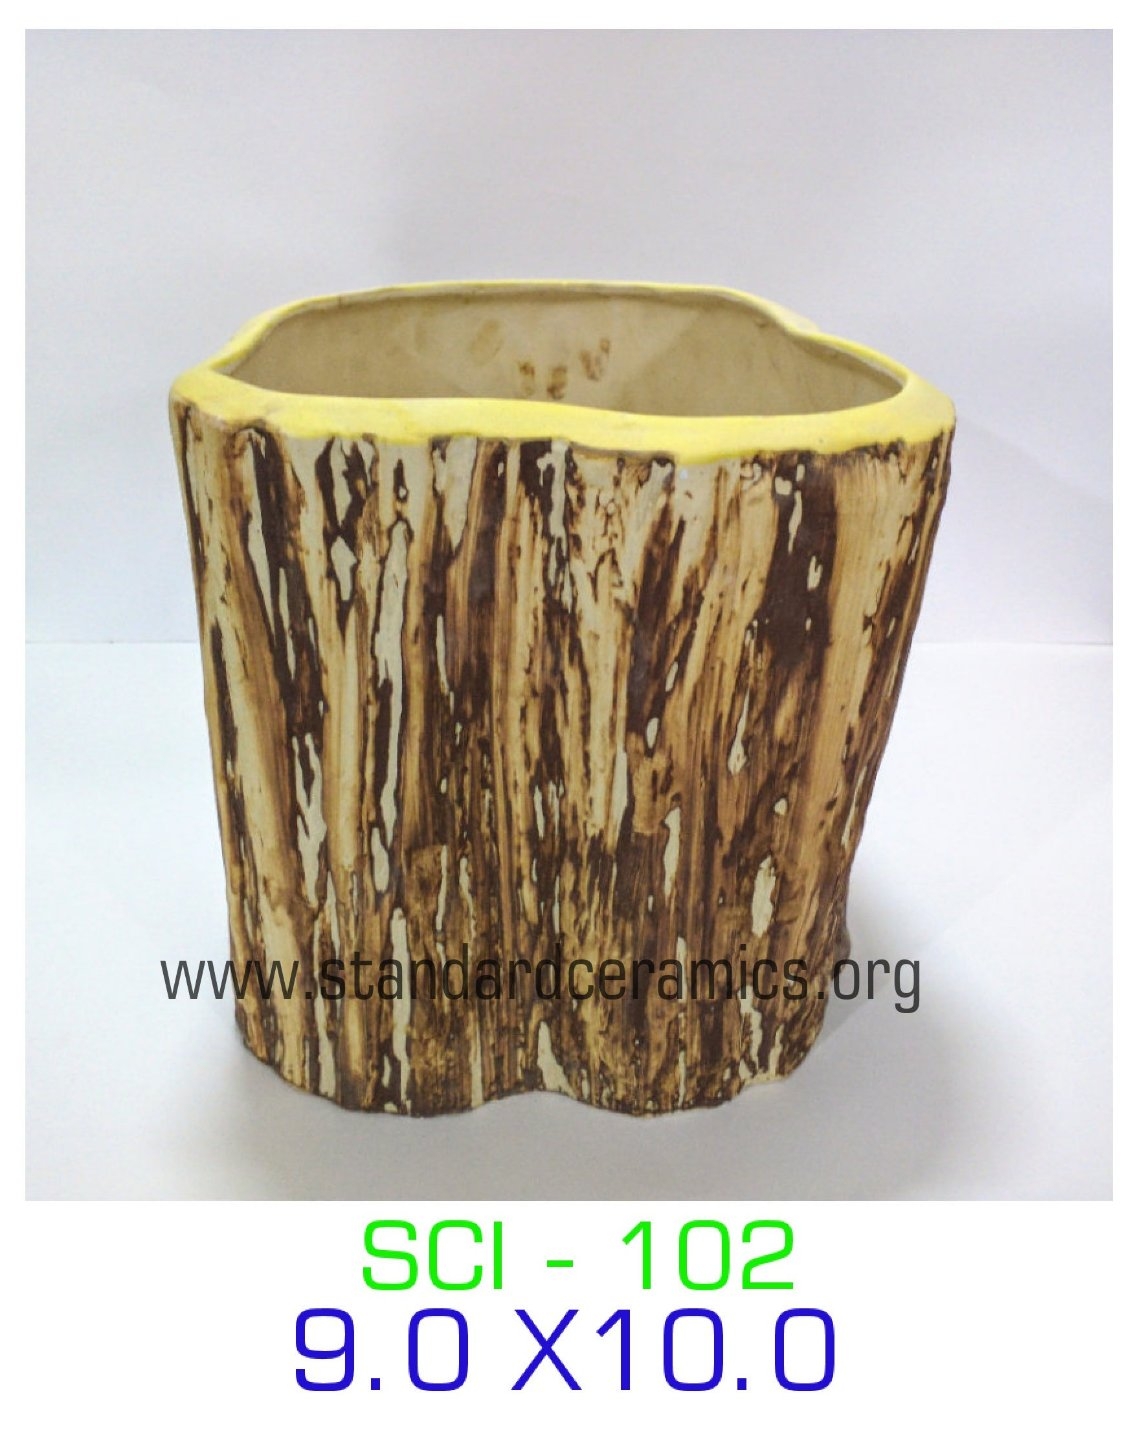 Ceramic Wood Block Pot SCI - 102 - W - 9 INCHES, H - 10 INCHES, SCI - 102